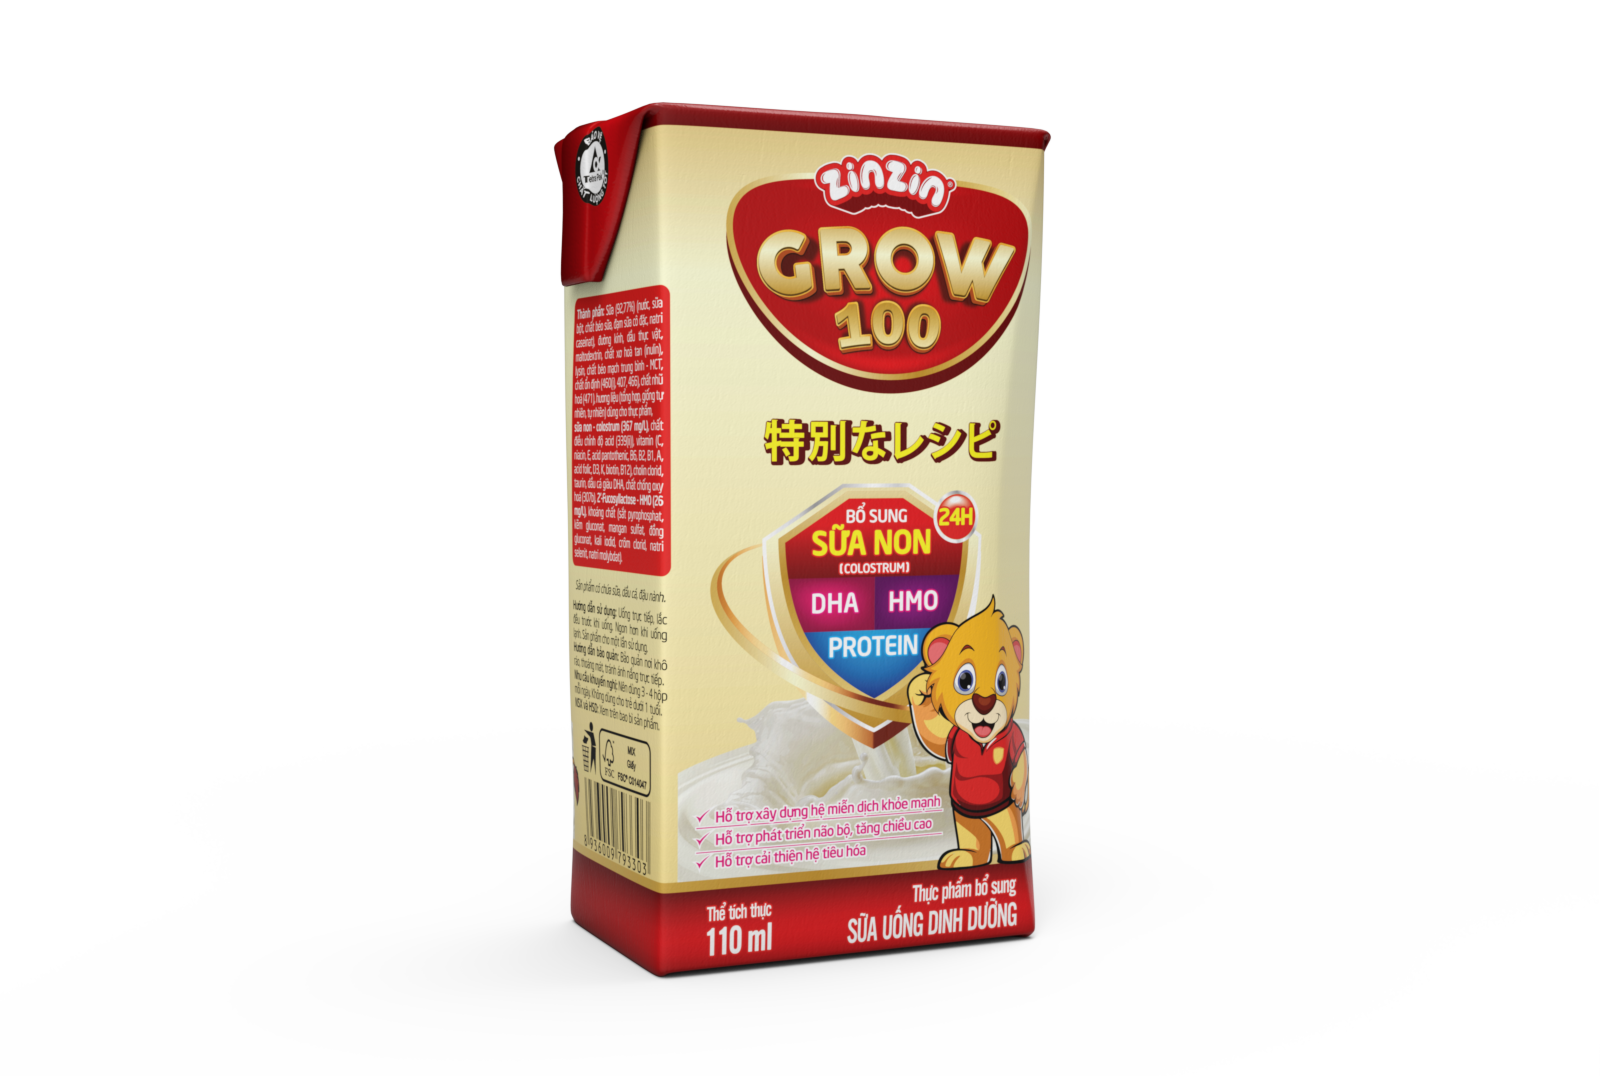 Sữa uống dinh dưỡng ZinZin Grow 100